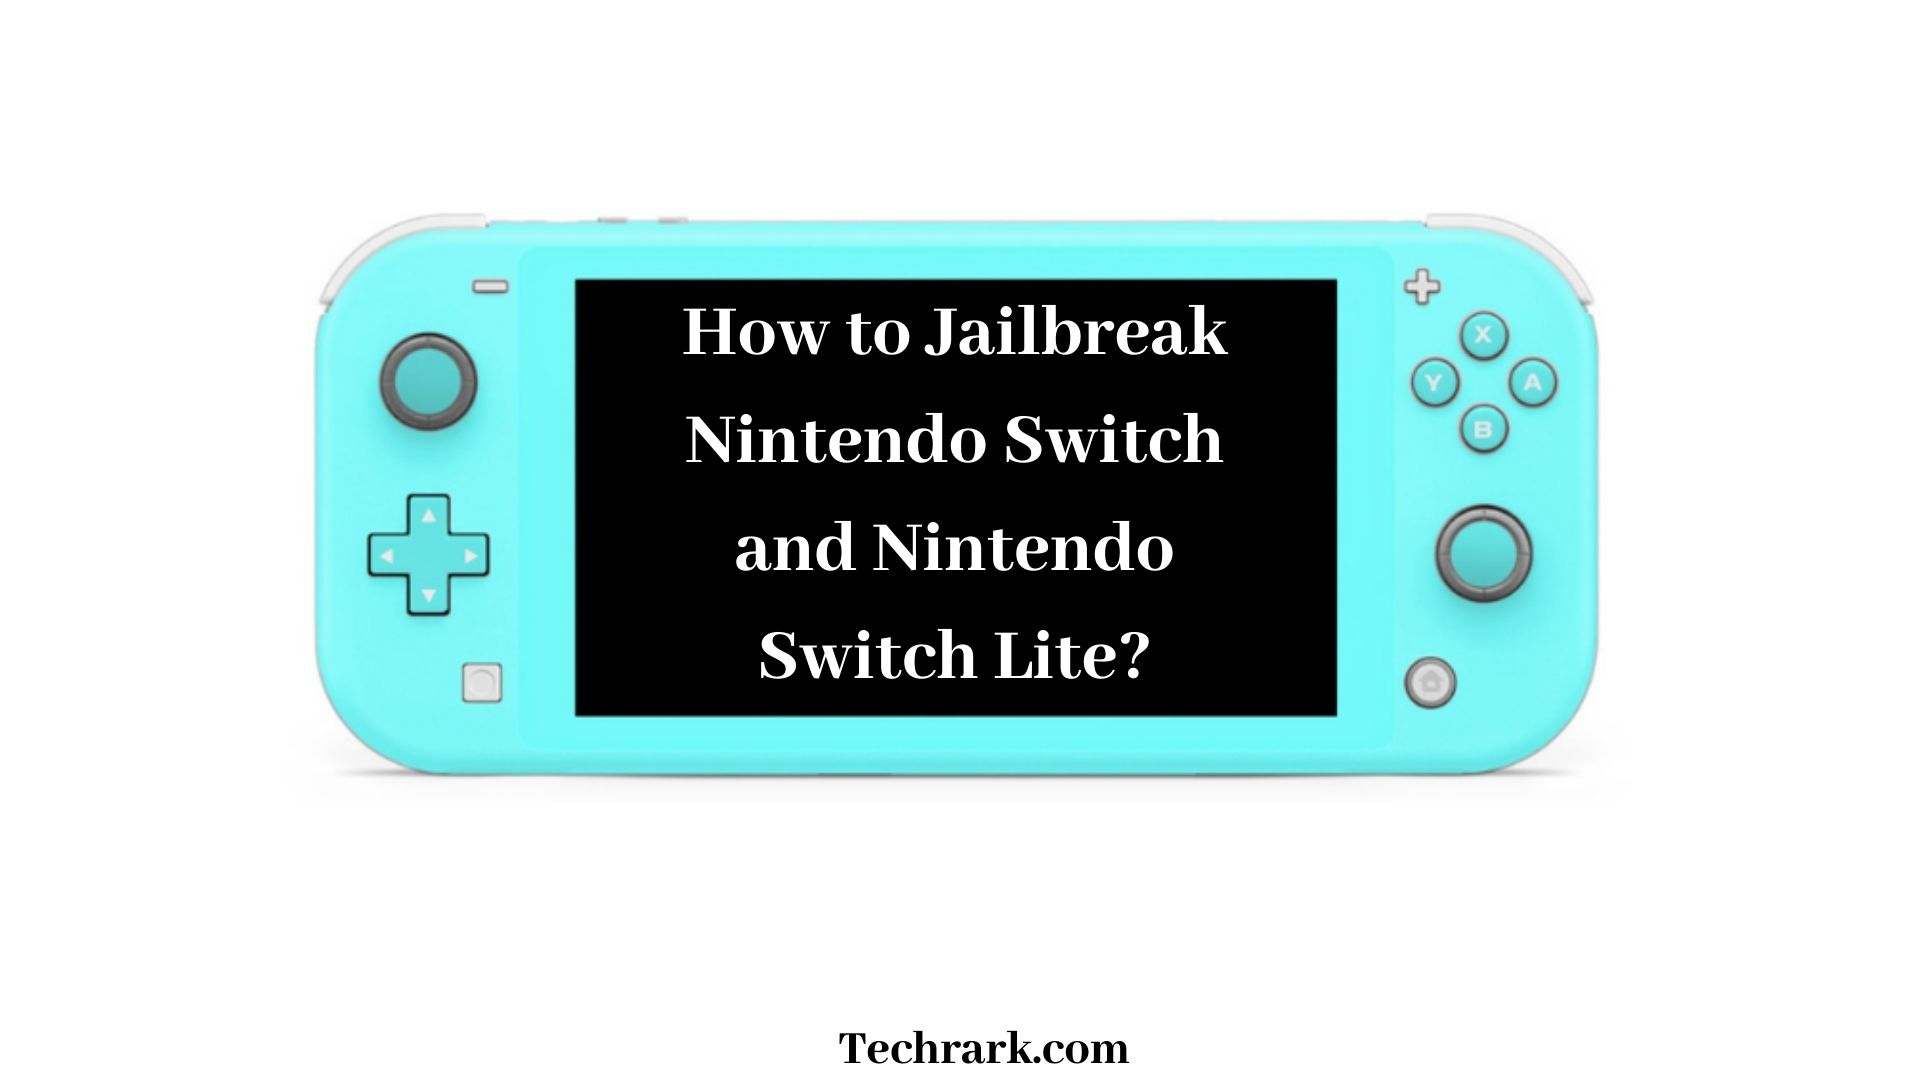 How to Jailbreak Nintendo Switch Lite